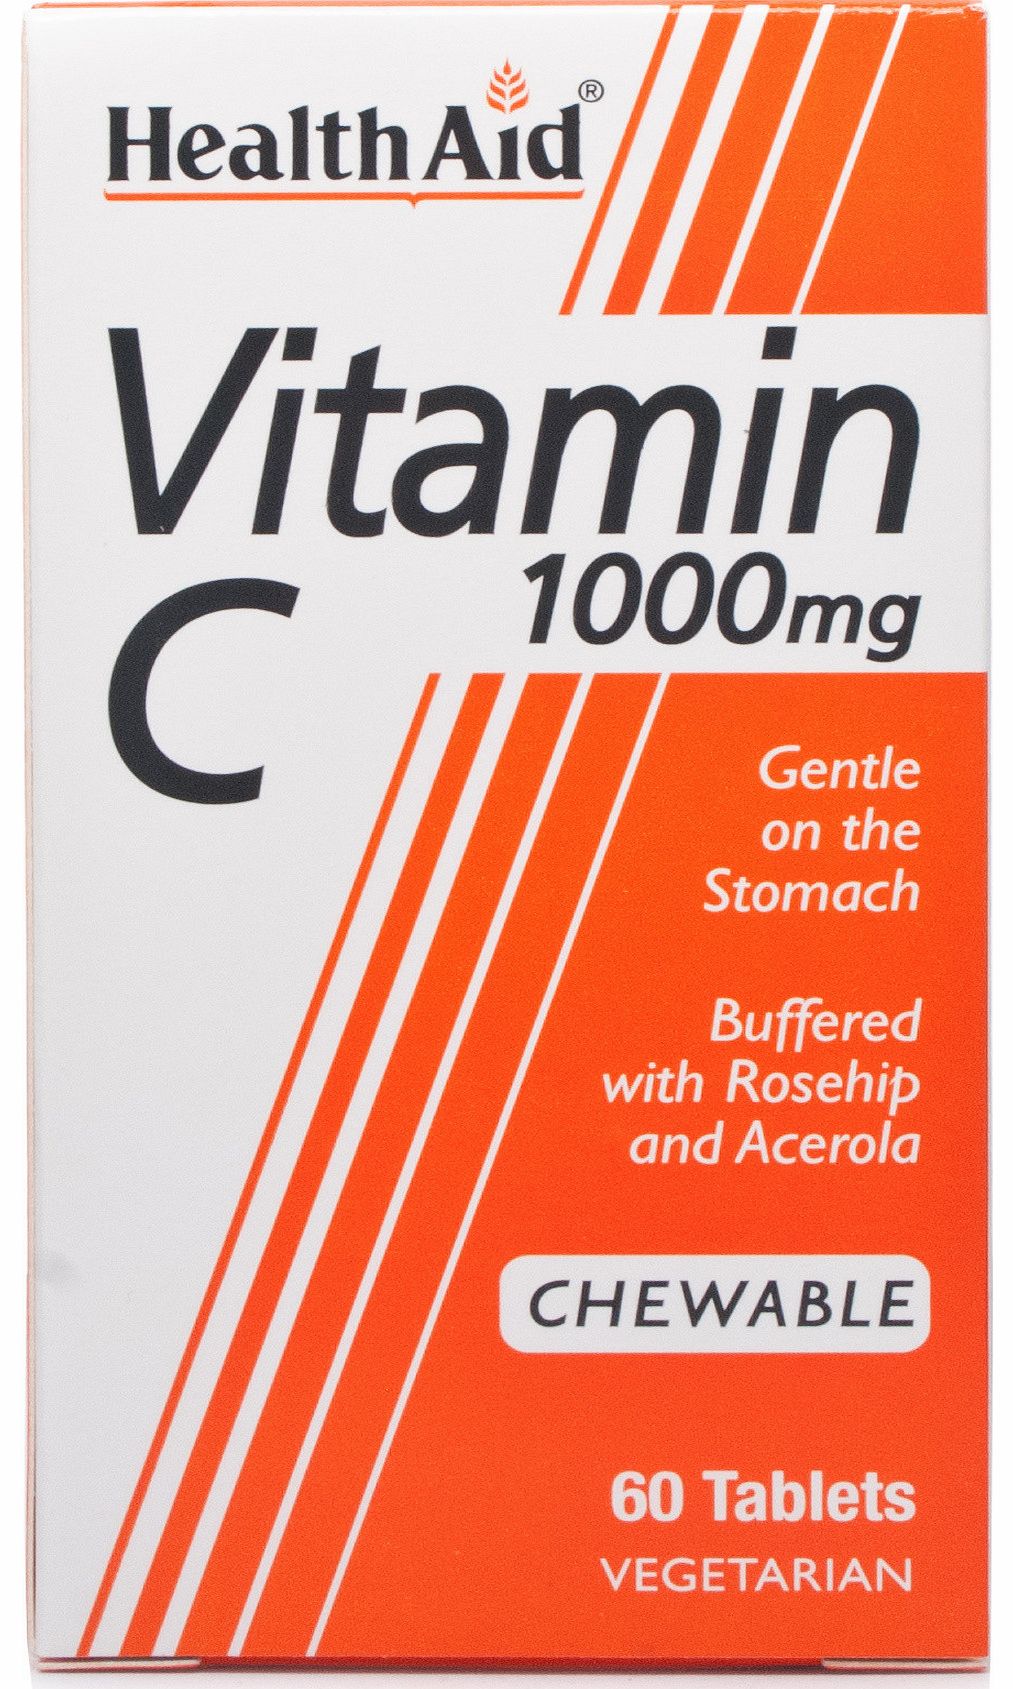 HealthAid Vitamin C 1000mg Tablets Chewable